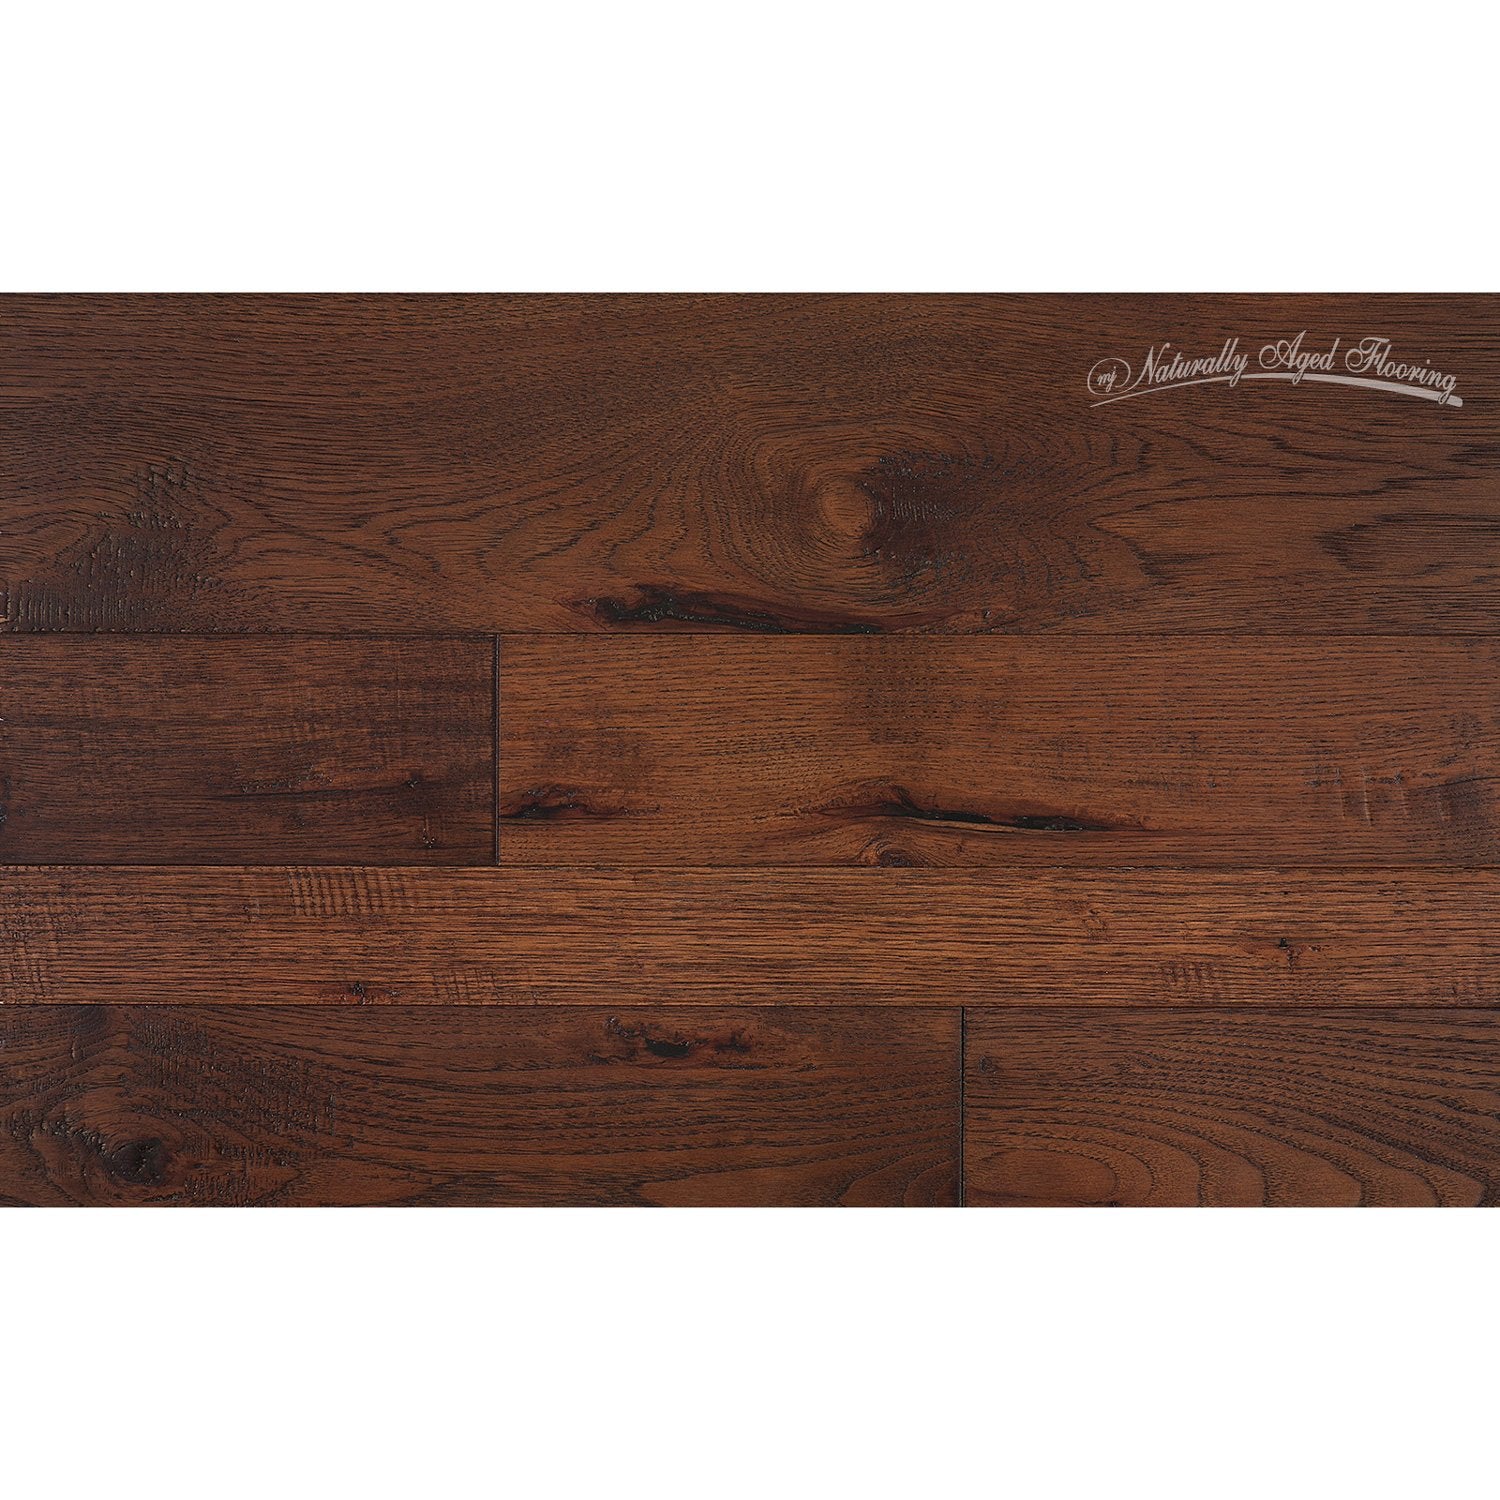 Naturally Aged Flooring - Medallion Collection Engineered Hardwood - Marsala